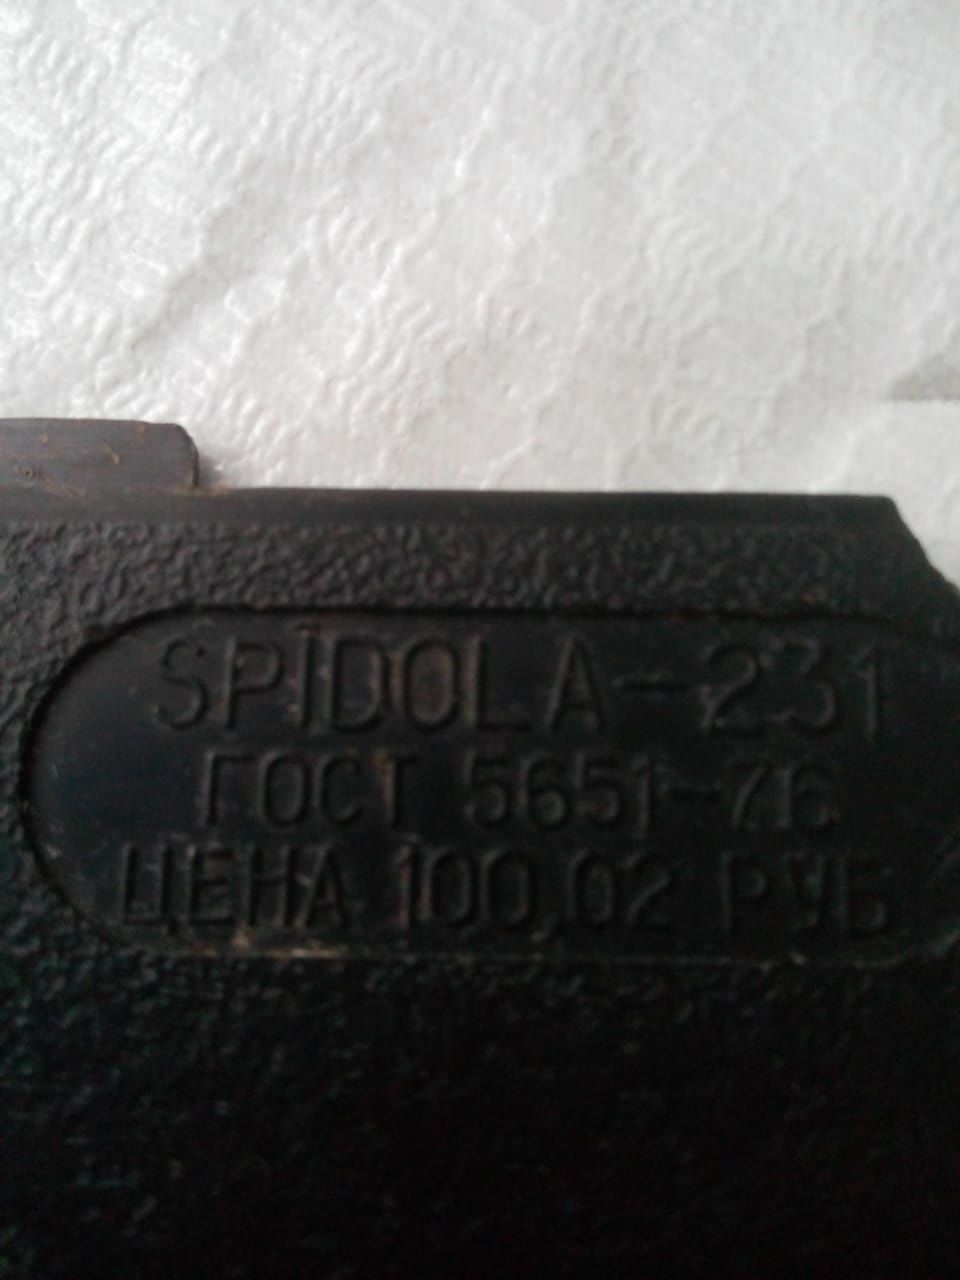 Радиоприёмник Спидола А-231 (Рига)